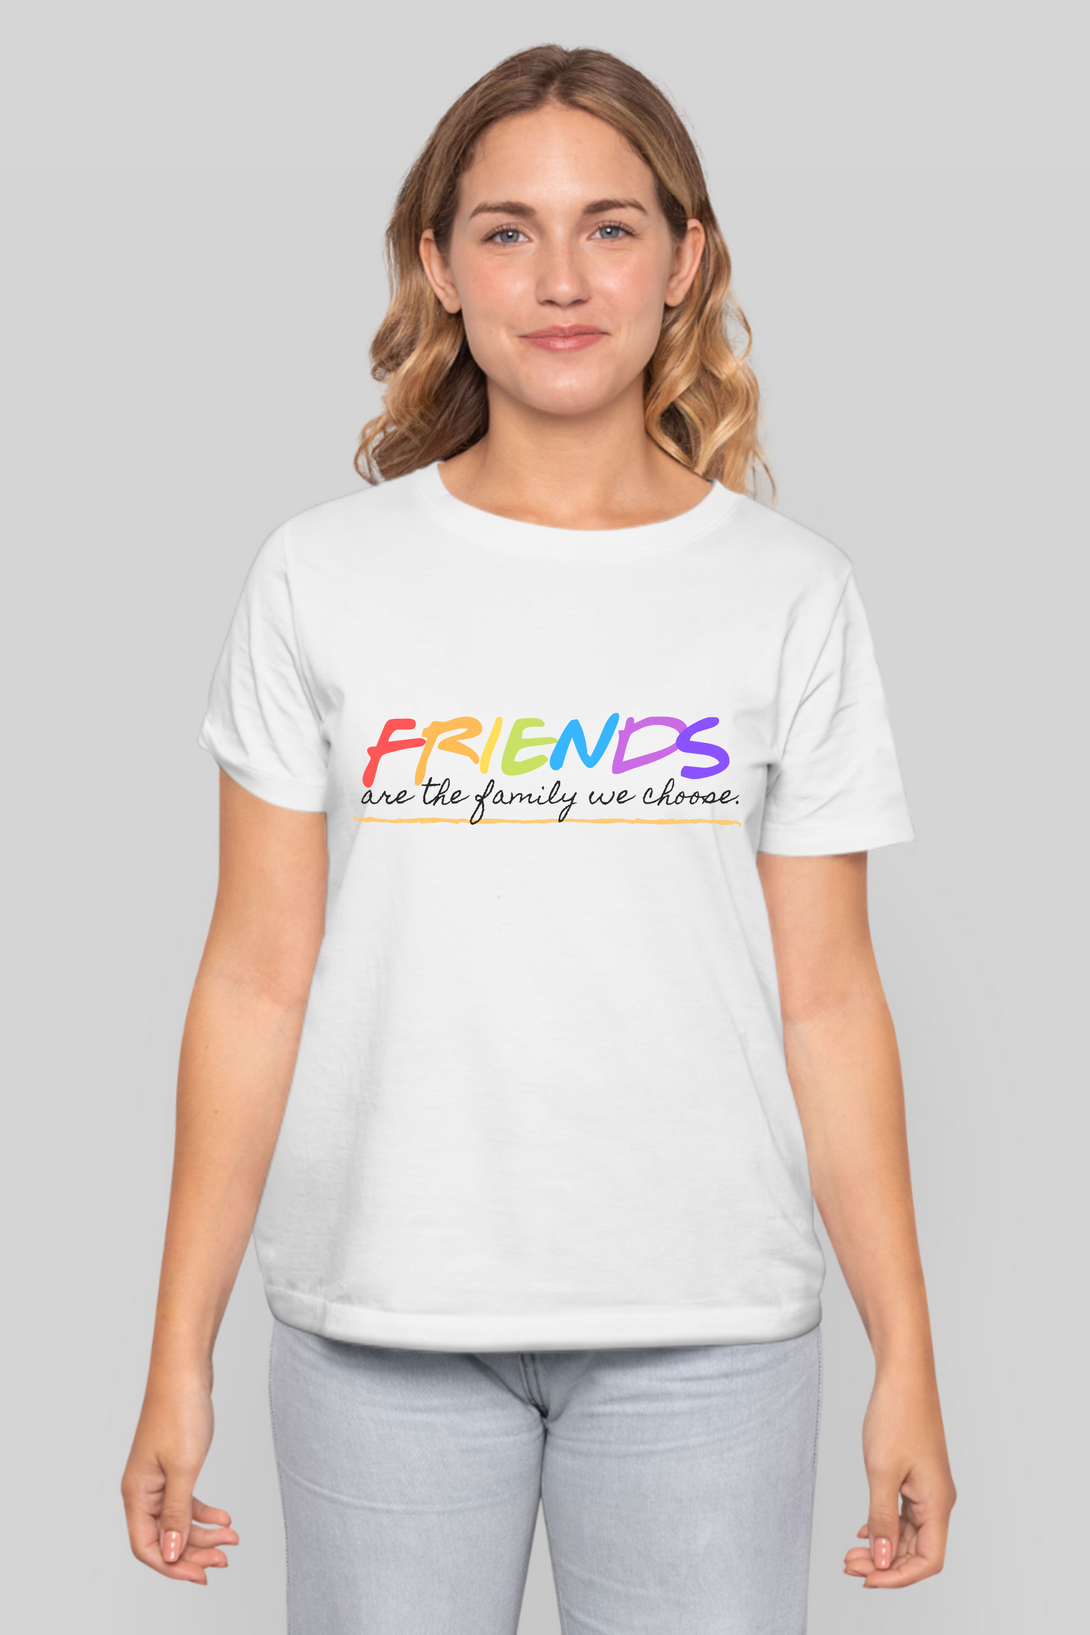 Chosen Family Printed T-Shirt For Women - WowWaves - 6